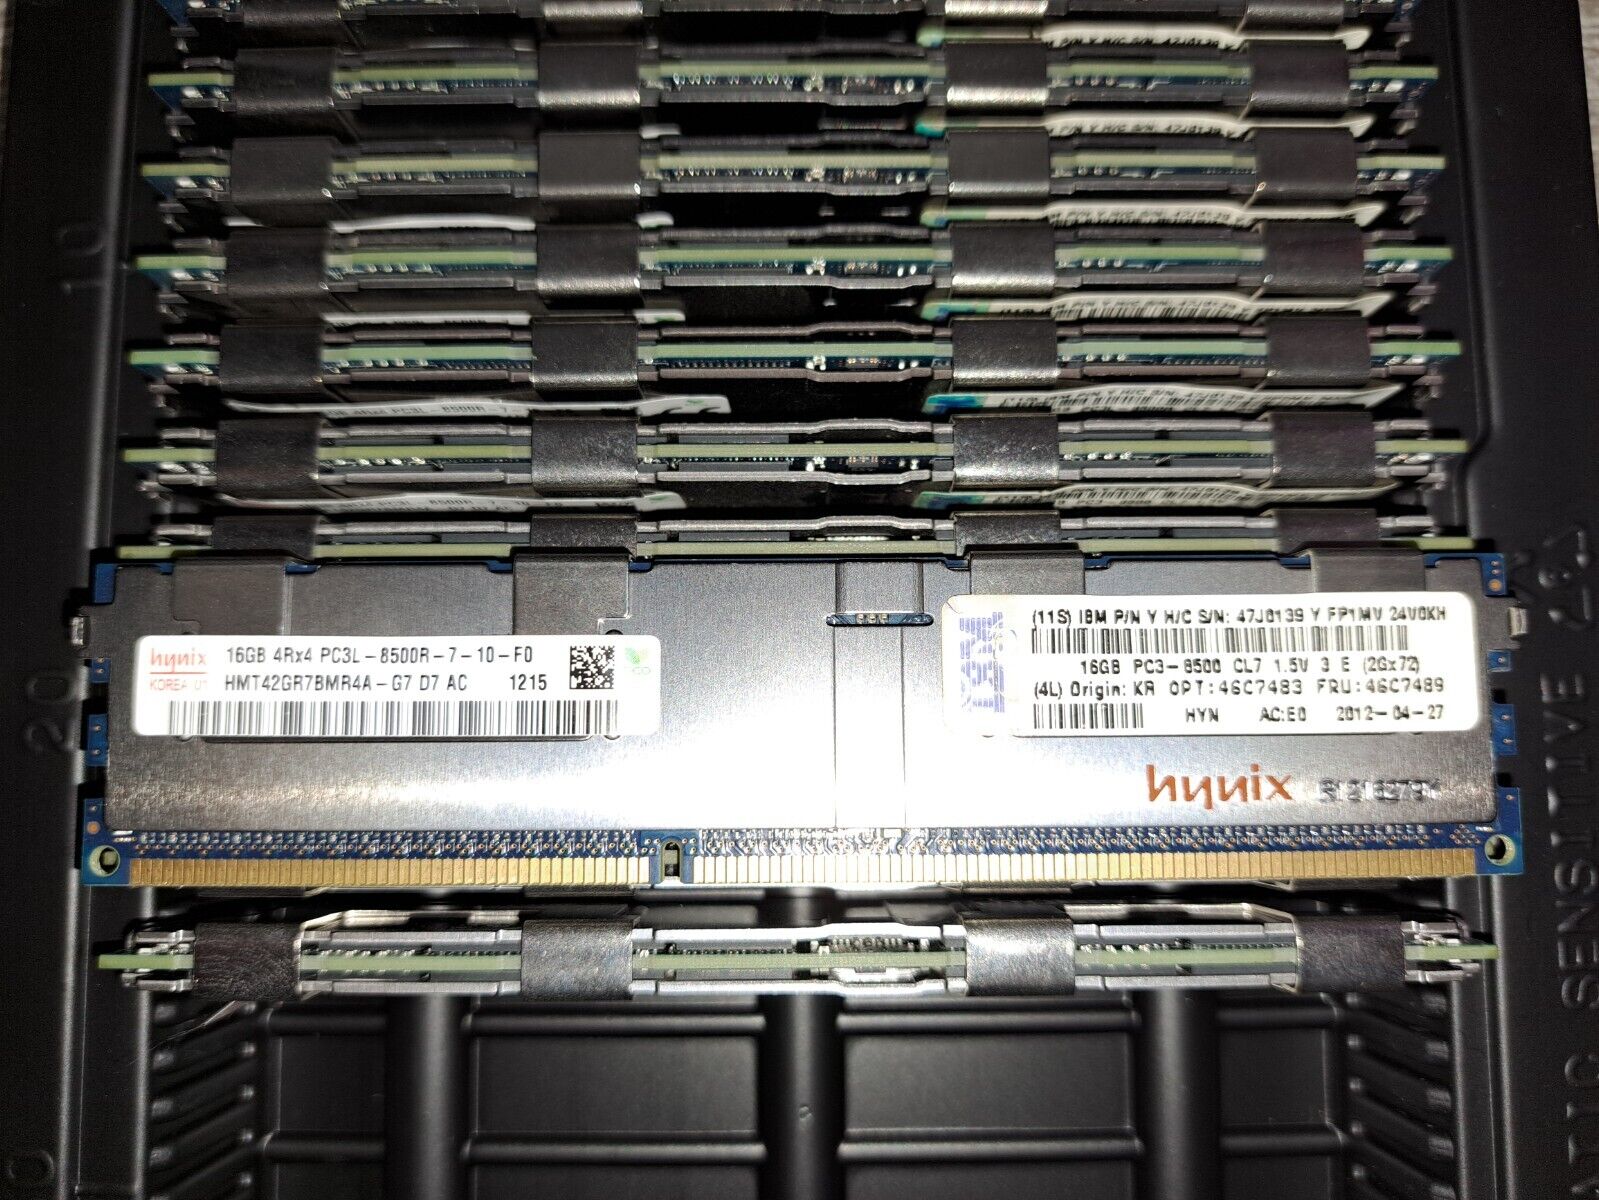 1TB 1024GB (64x16GB) DDR3 PC3L-8500R ECC Reg Server Memory RAM 4Rx4 - Dell R910